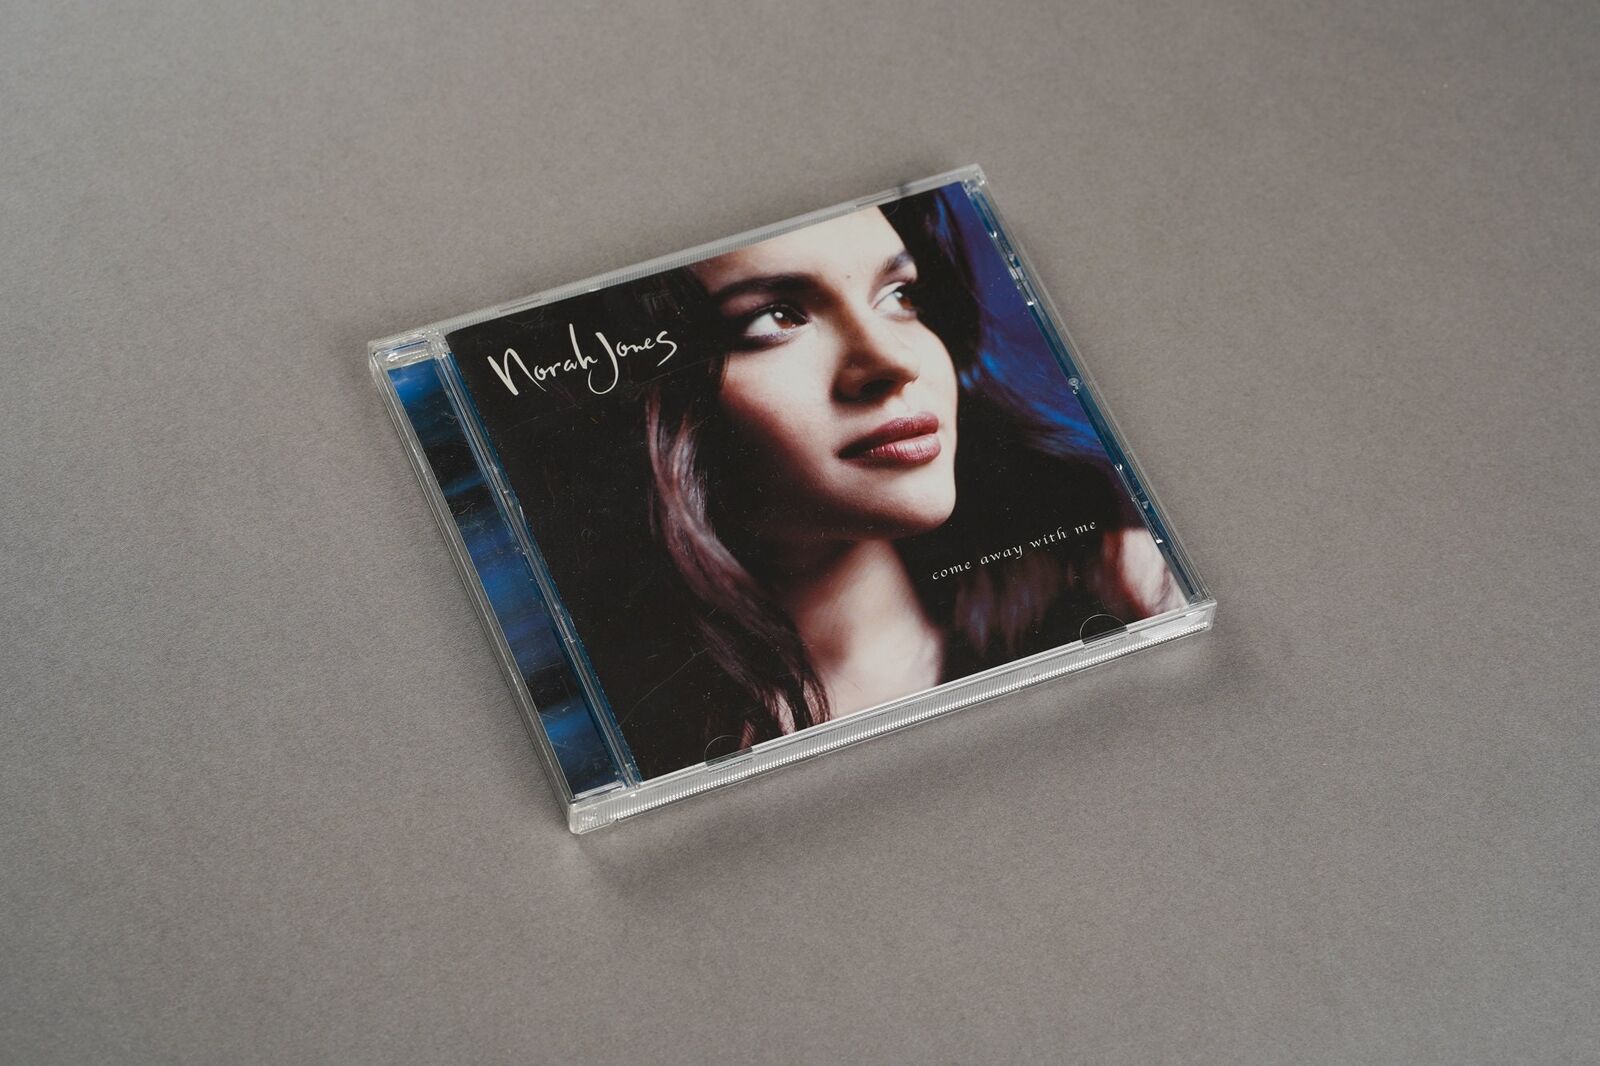 Norah Jones - Come Away With Me - 2002 Original CD Compact Disc Album